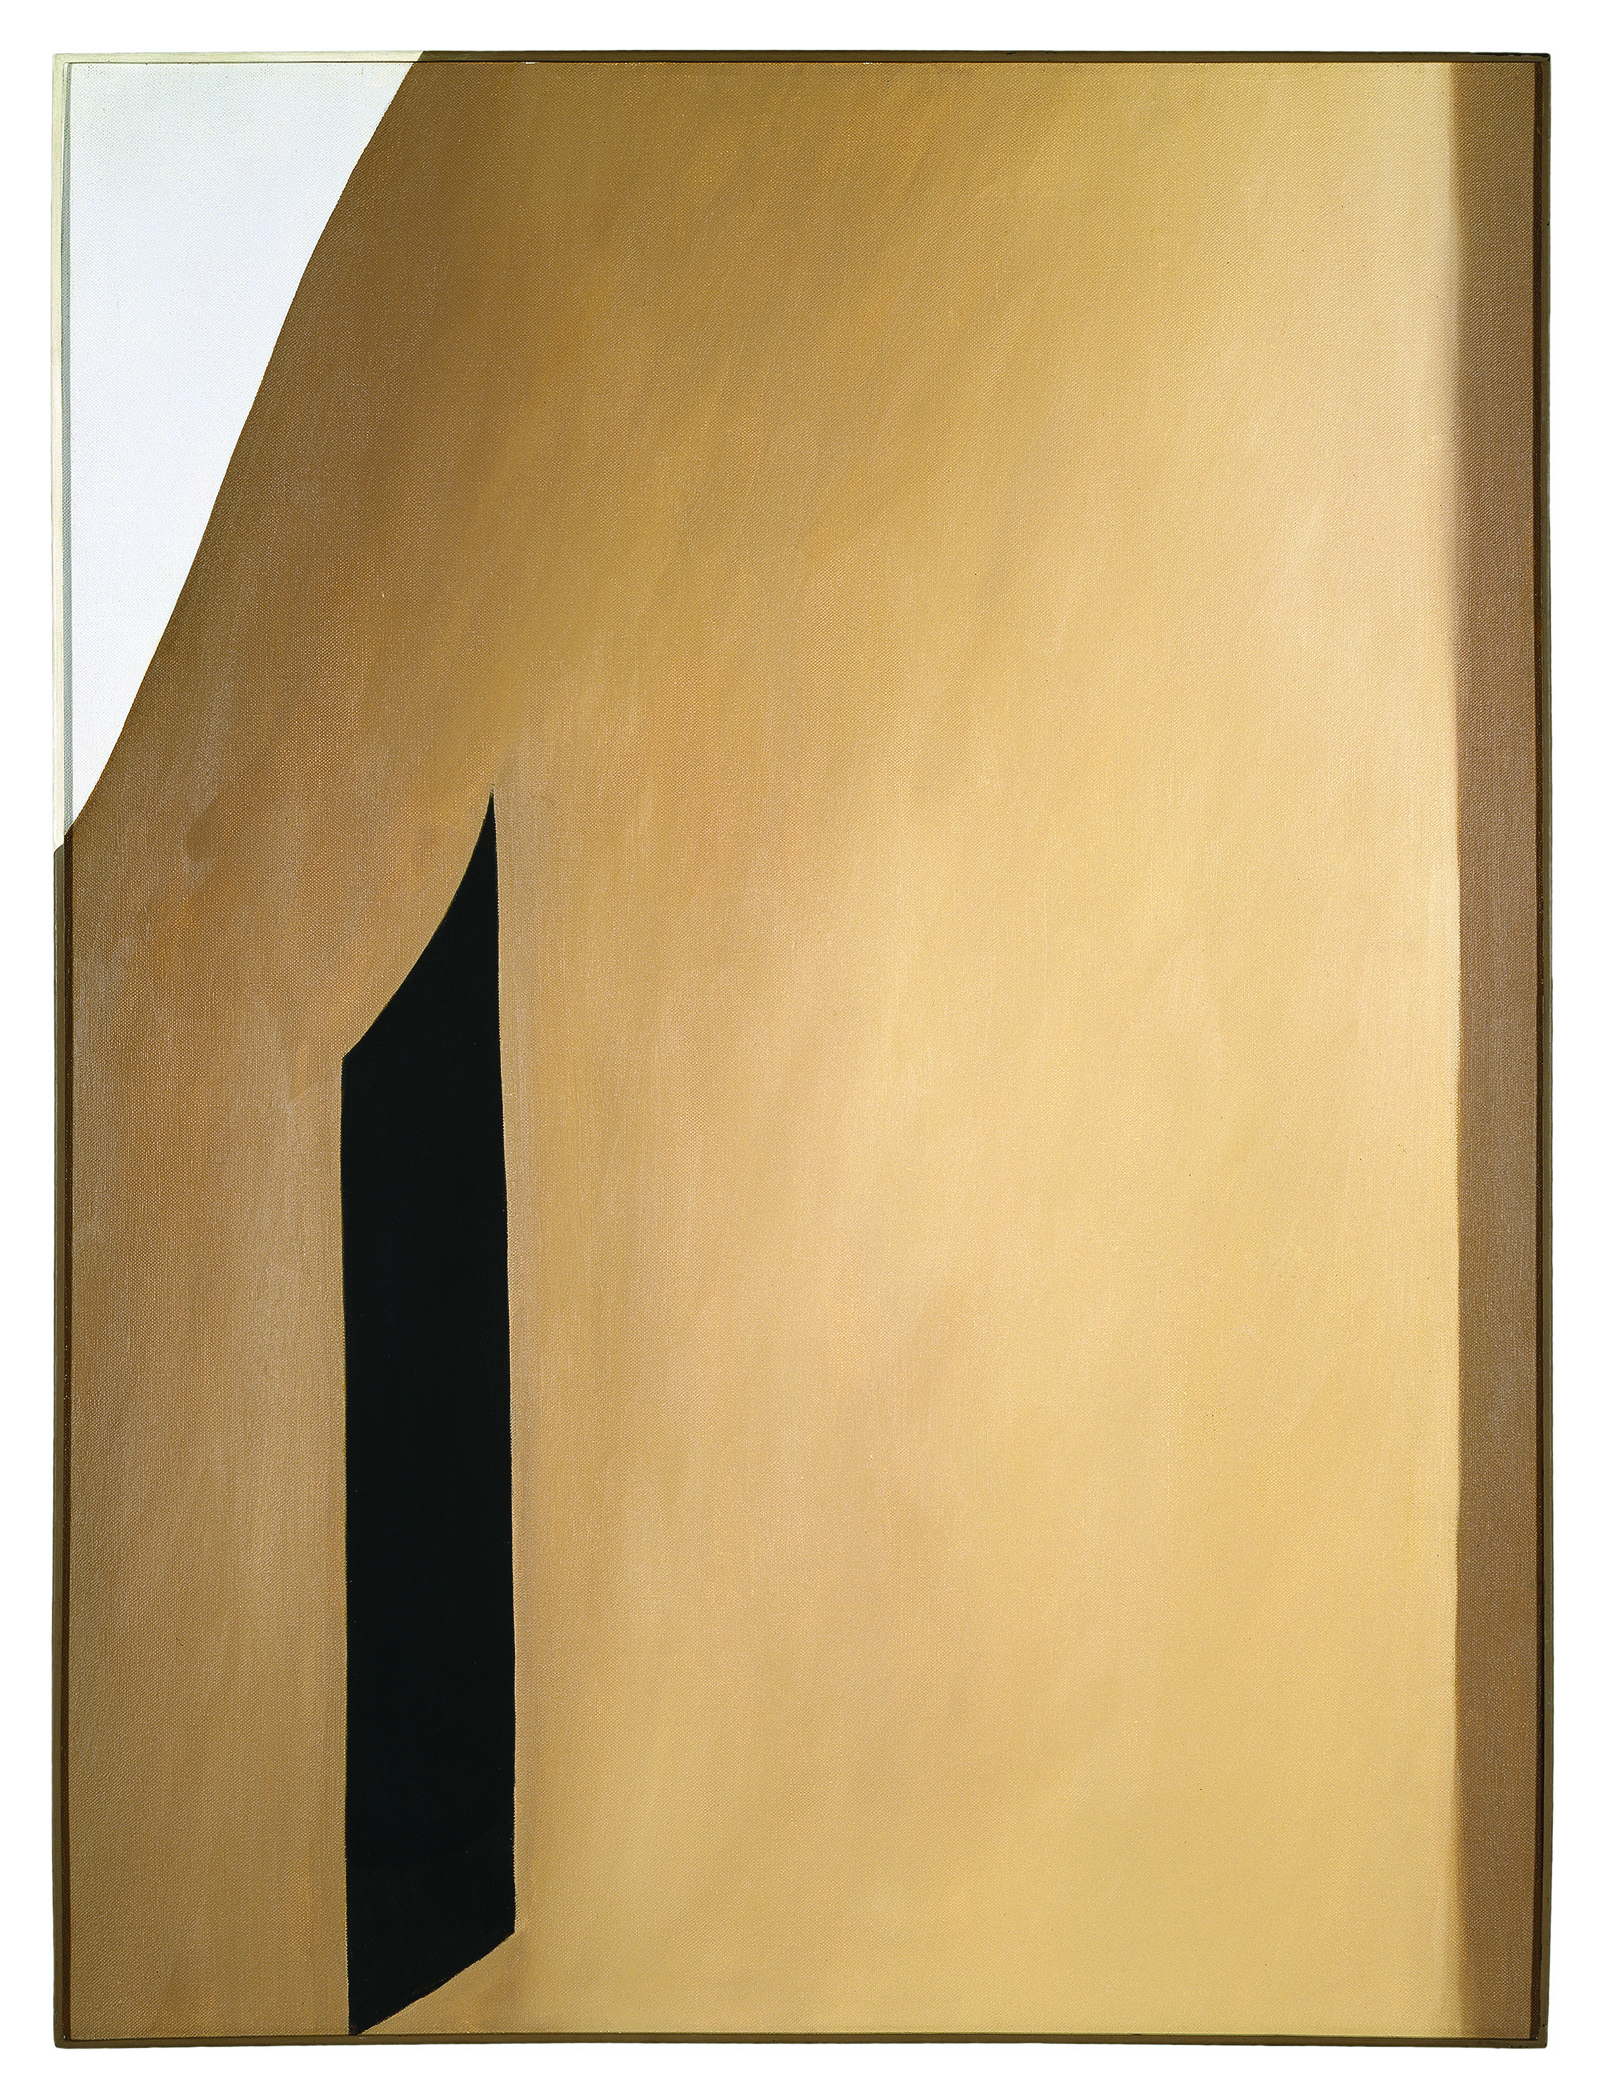 Amon Carter Museum of American Art/c 2015 Georgia O’Keeffe Museum